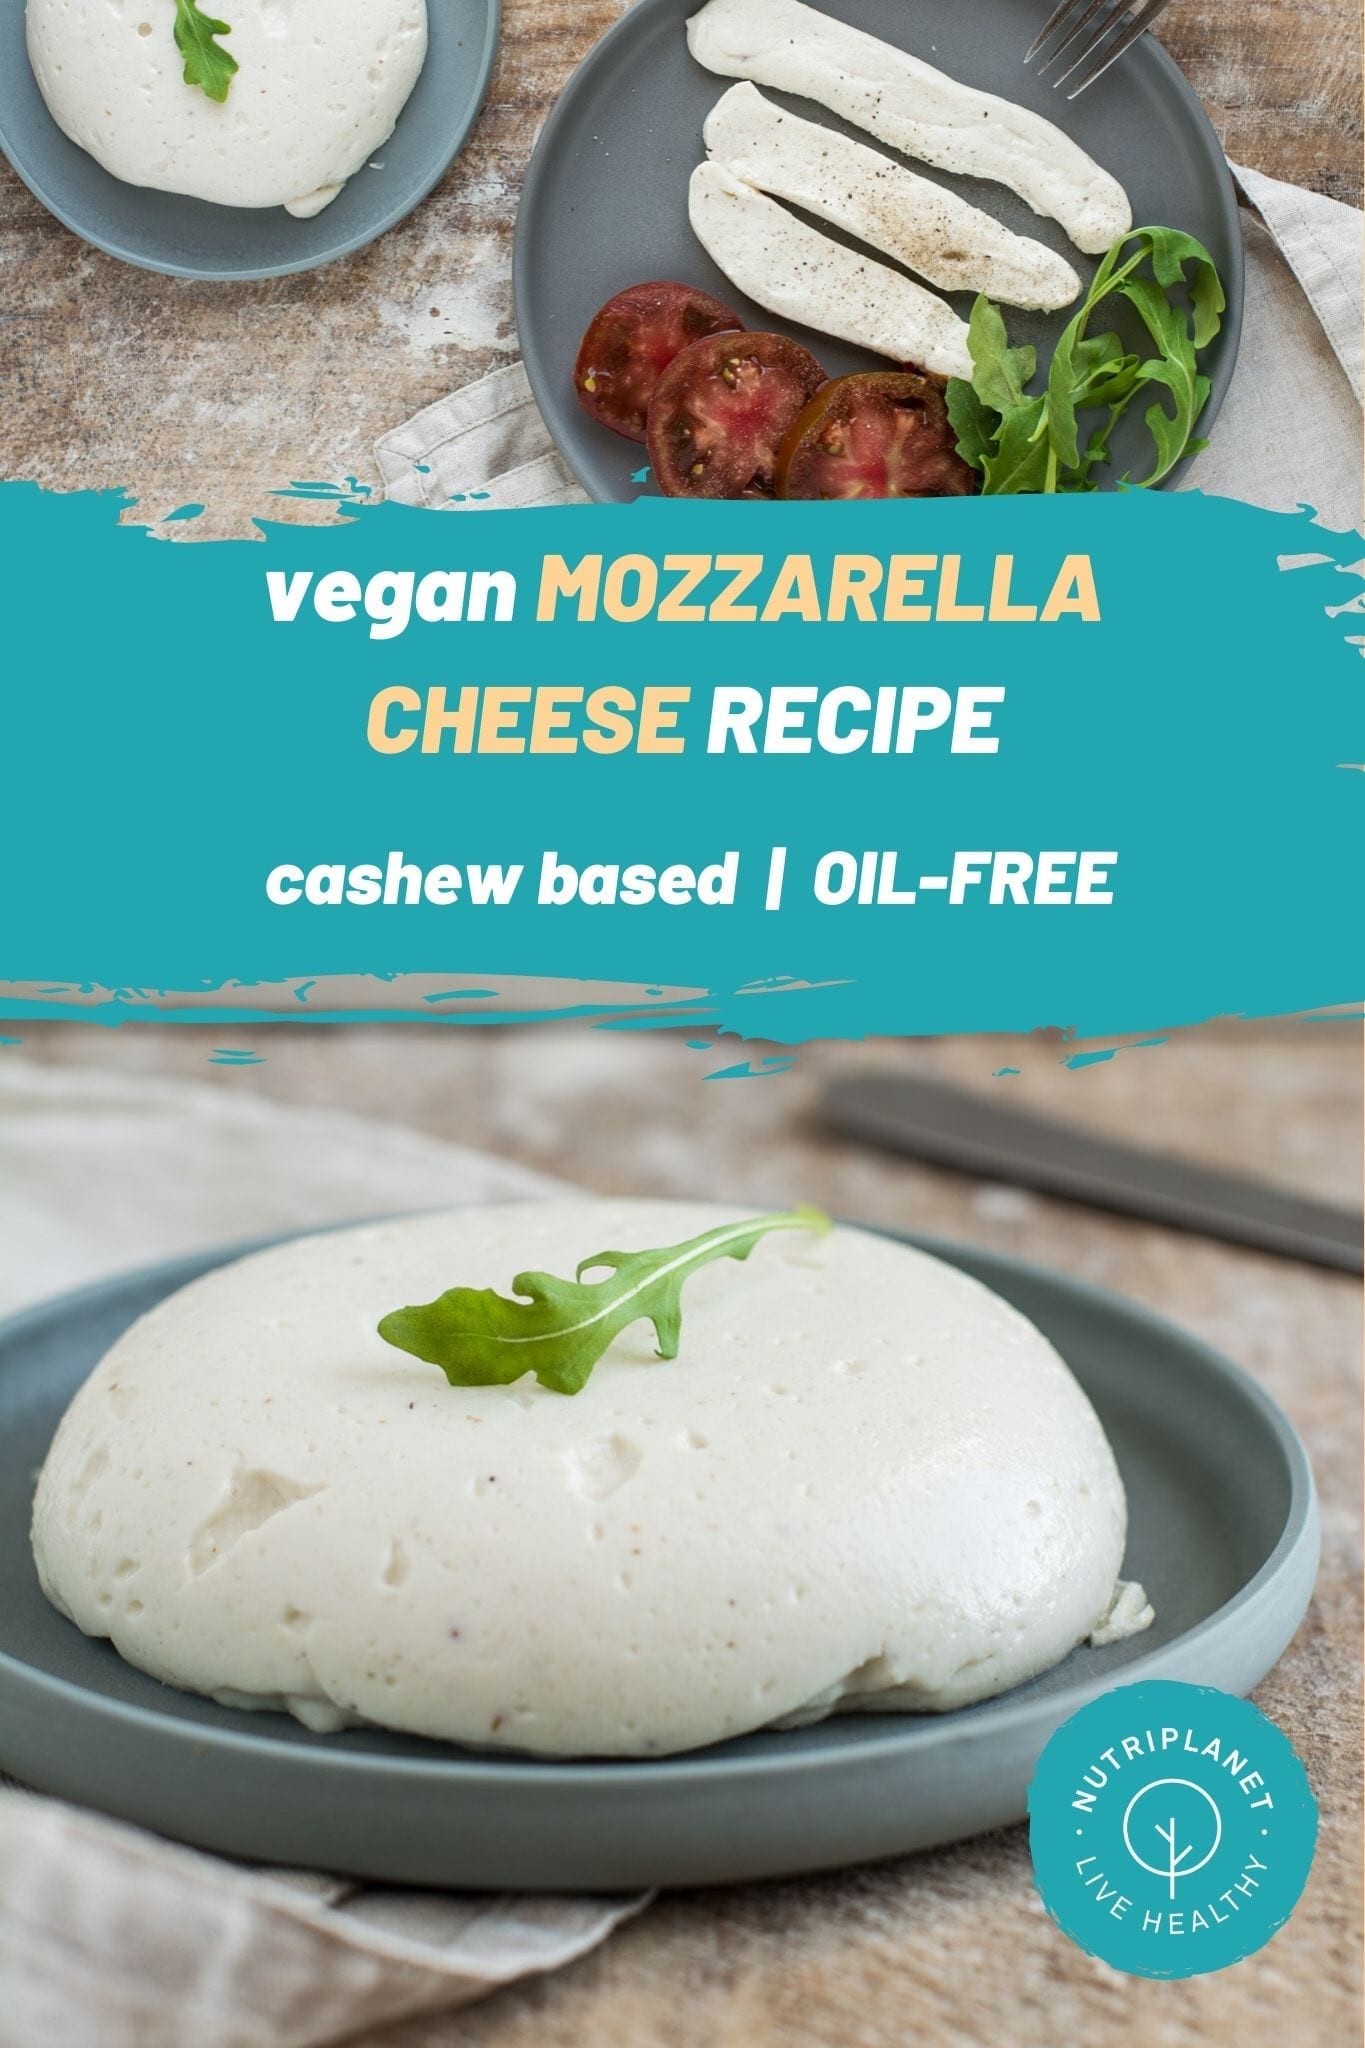 Cashew based vegan mozzarella cheese recipe that is oil-free and gluten-free yet so creamy, soft and tasty.
Vegan mozzarella juust.